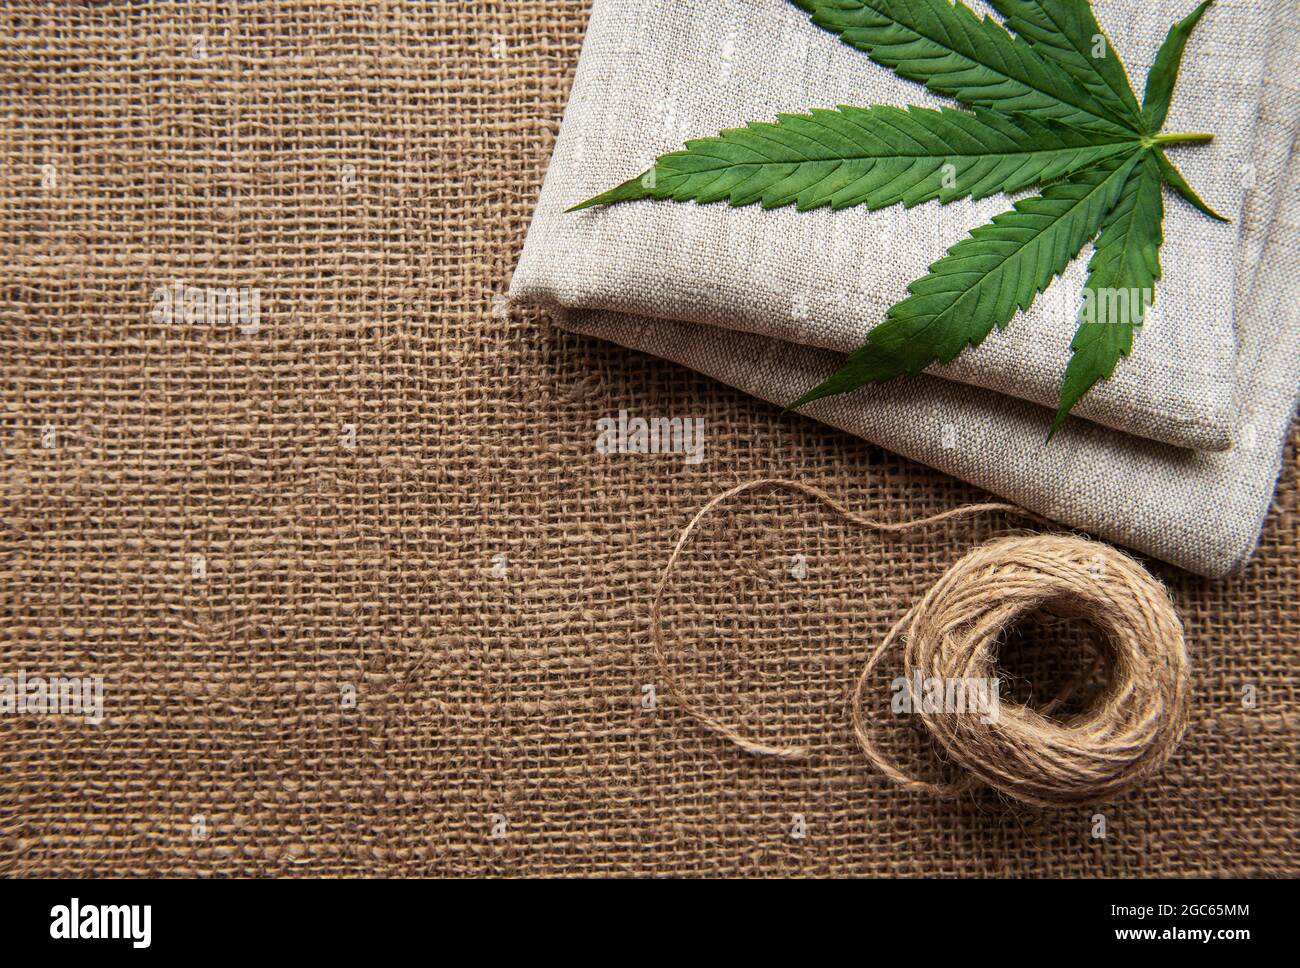 https://c8.alamy.com/comp/2GC65MM/cannabis-leaves-on-the-background-of-coarse-hemp-fabric-2GC65MM.jpg